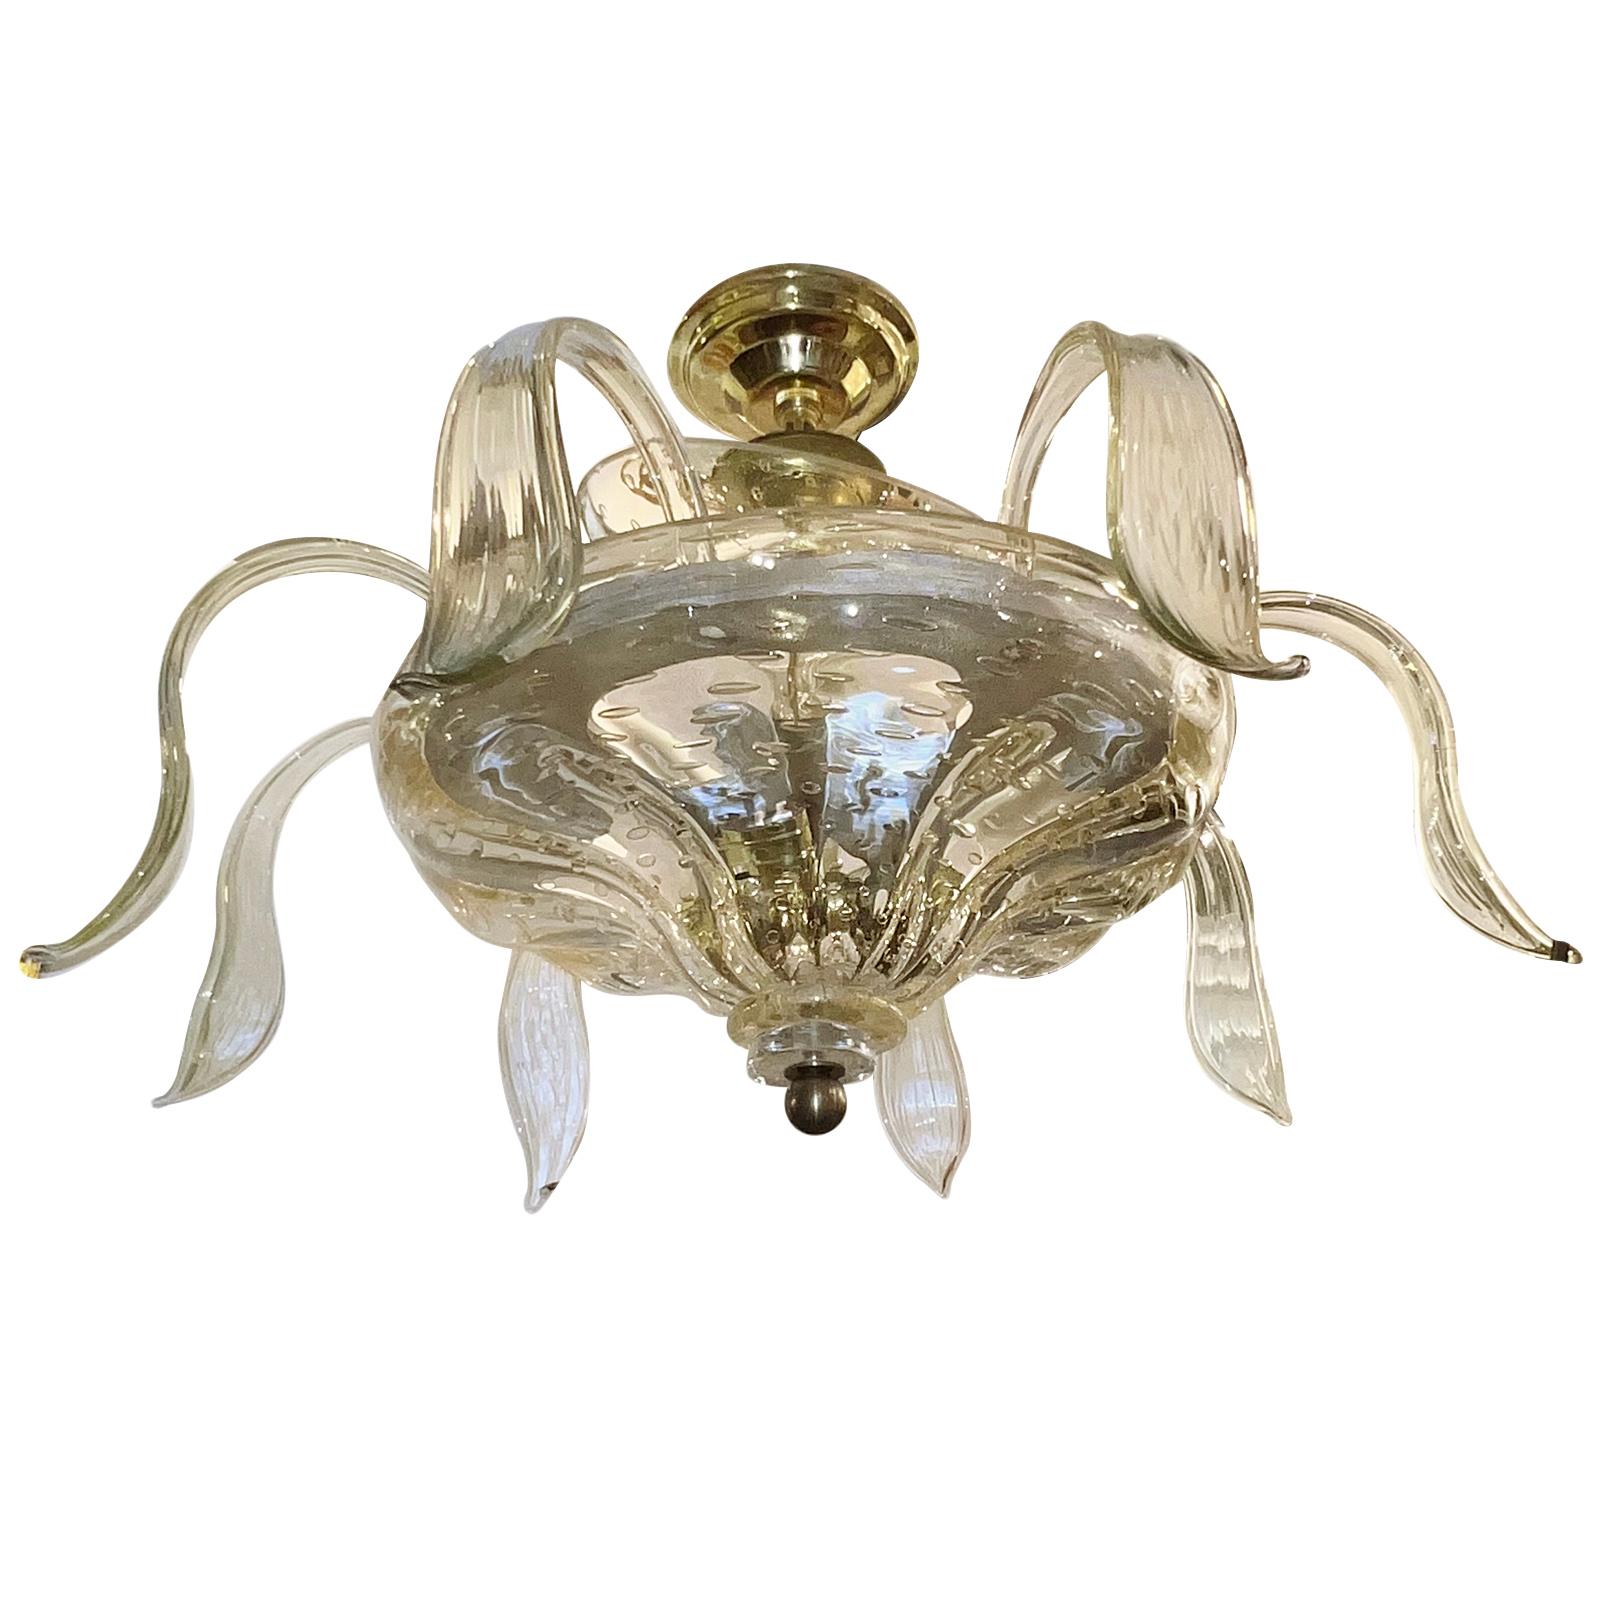 A circa 1960's Italian blown glass chandelier with 3 Edison lights.

Measurements:
Present drop: 17.75